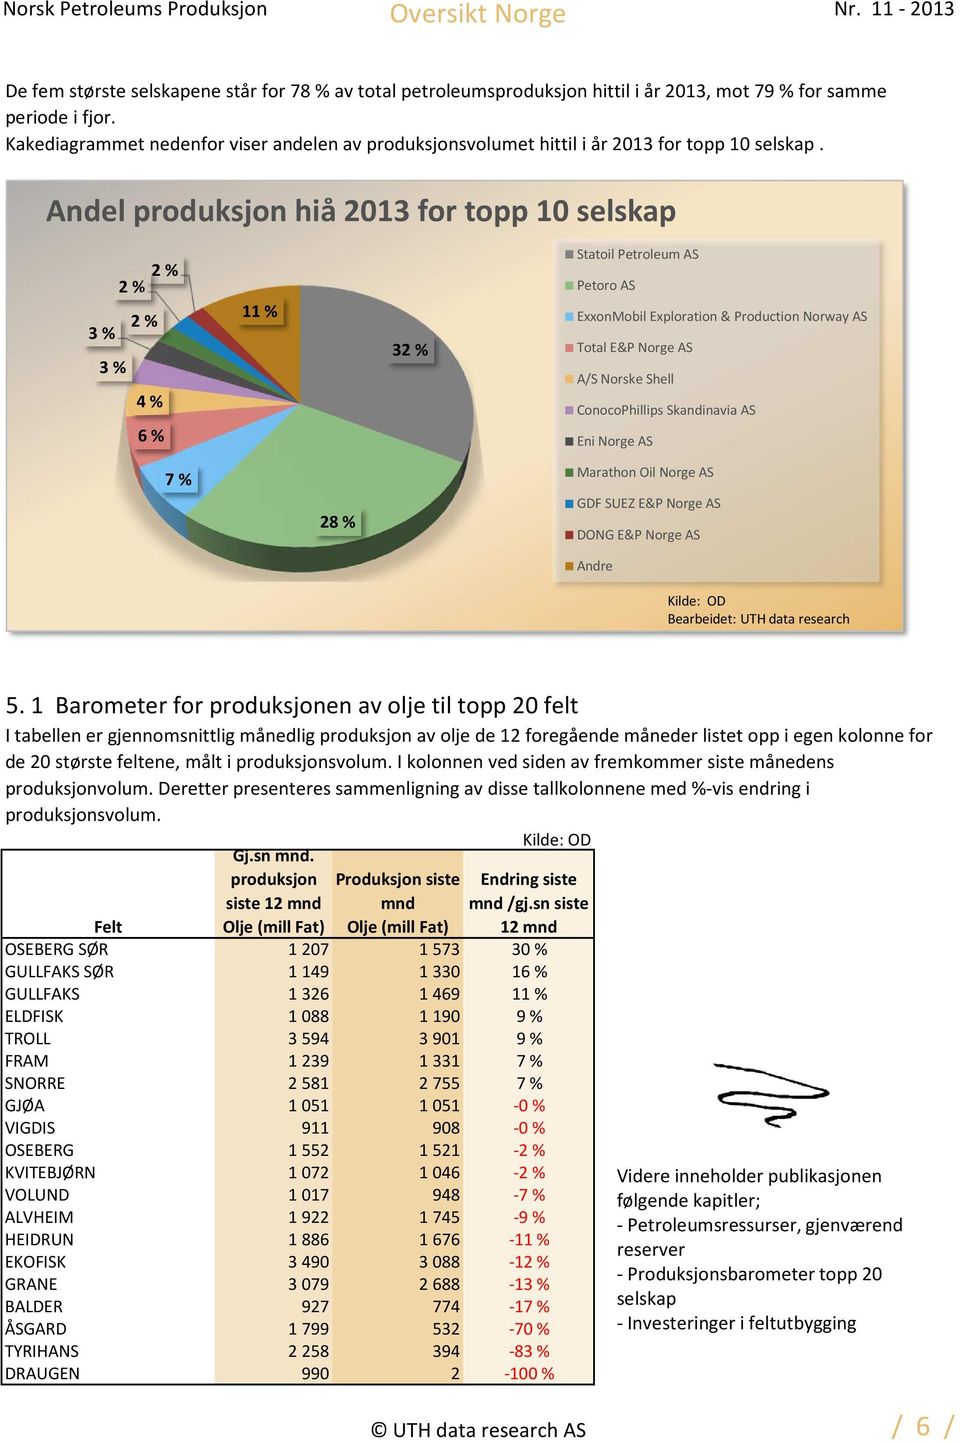 Andel produksjon hiå 2013 for topp 10 selskap Statoil Petroleum AS 2 % 2 % 3 % 2 % 11 % 3 % 4 % 6 % 32 % Petoro AS ExxonMobil Exploration & Production Norway AS Total E&P Norge AS A/S Norske Shell